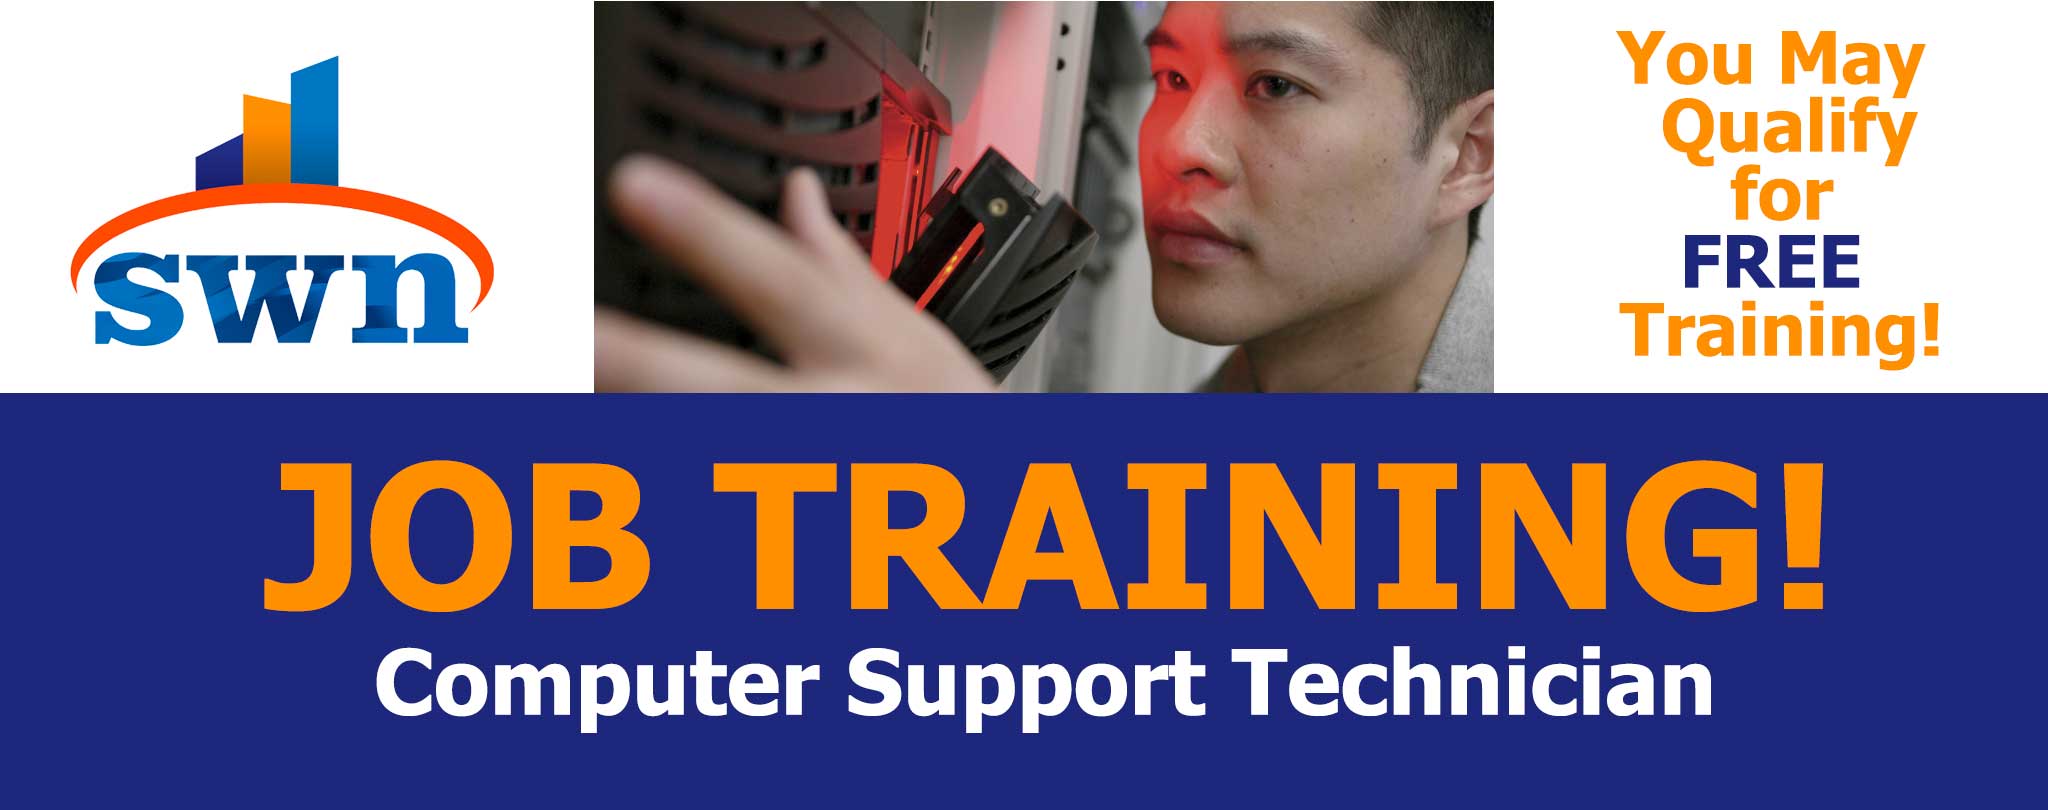 Job Training: Computer Support Technician